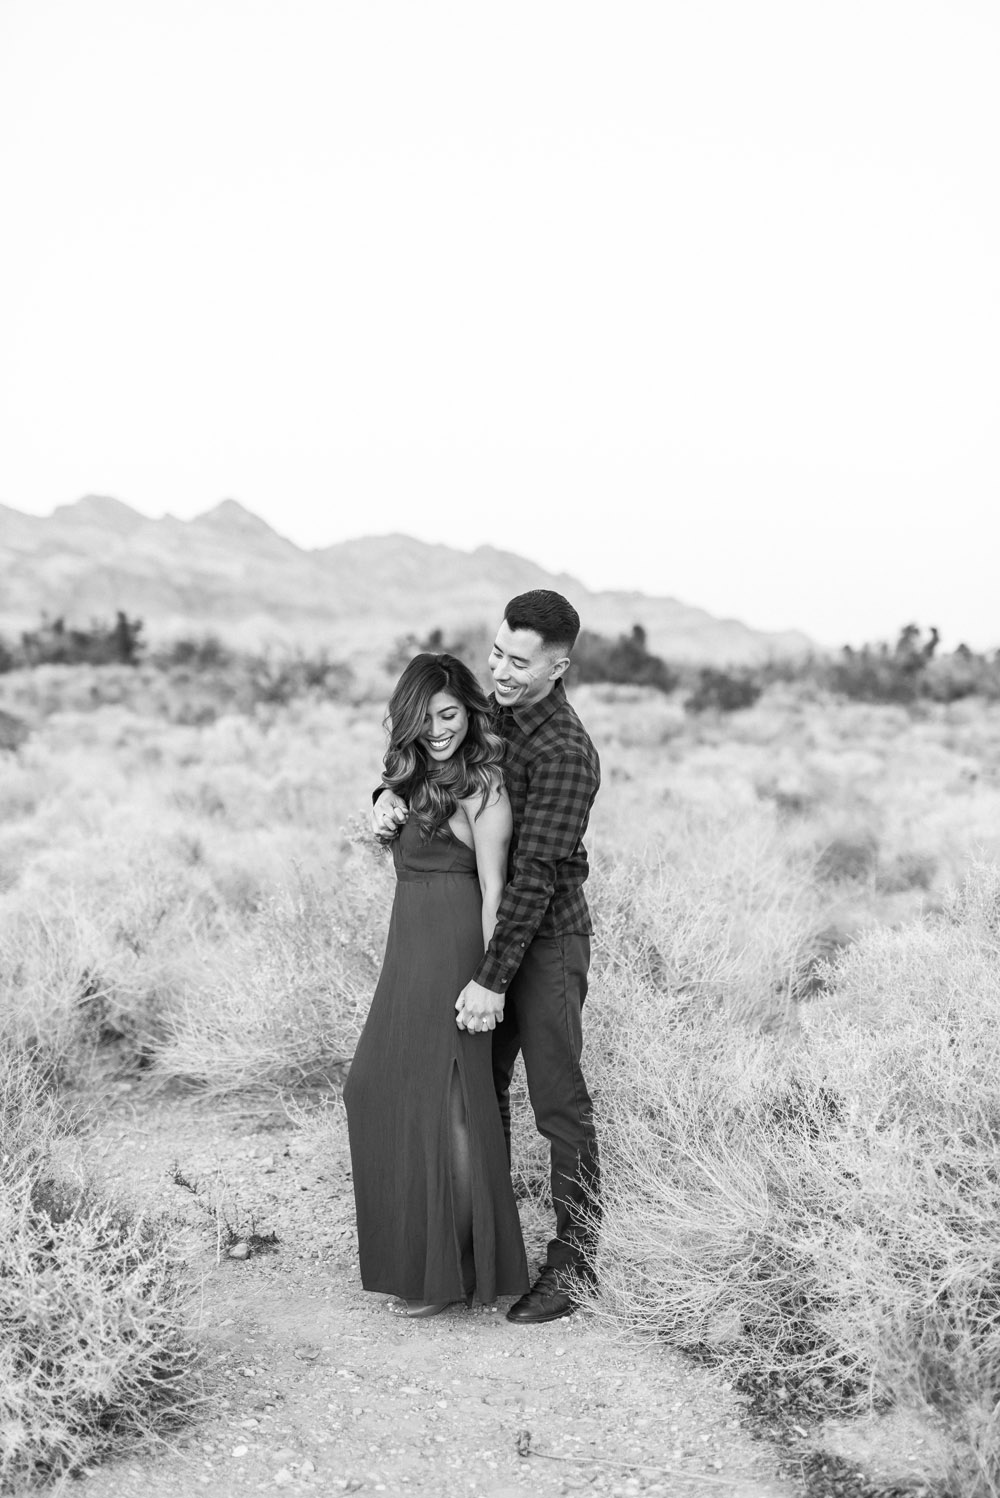 Engagement Session | Kristen Marie Weddings + Portraits | Las Vegas Wedding Photographer